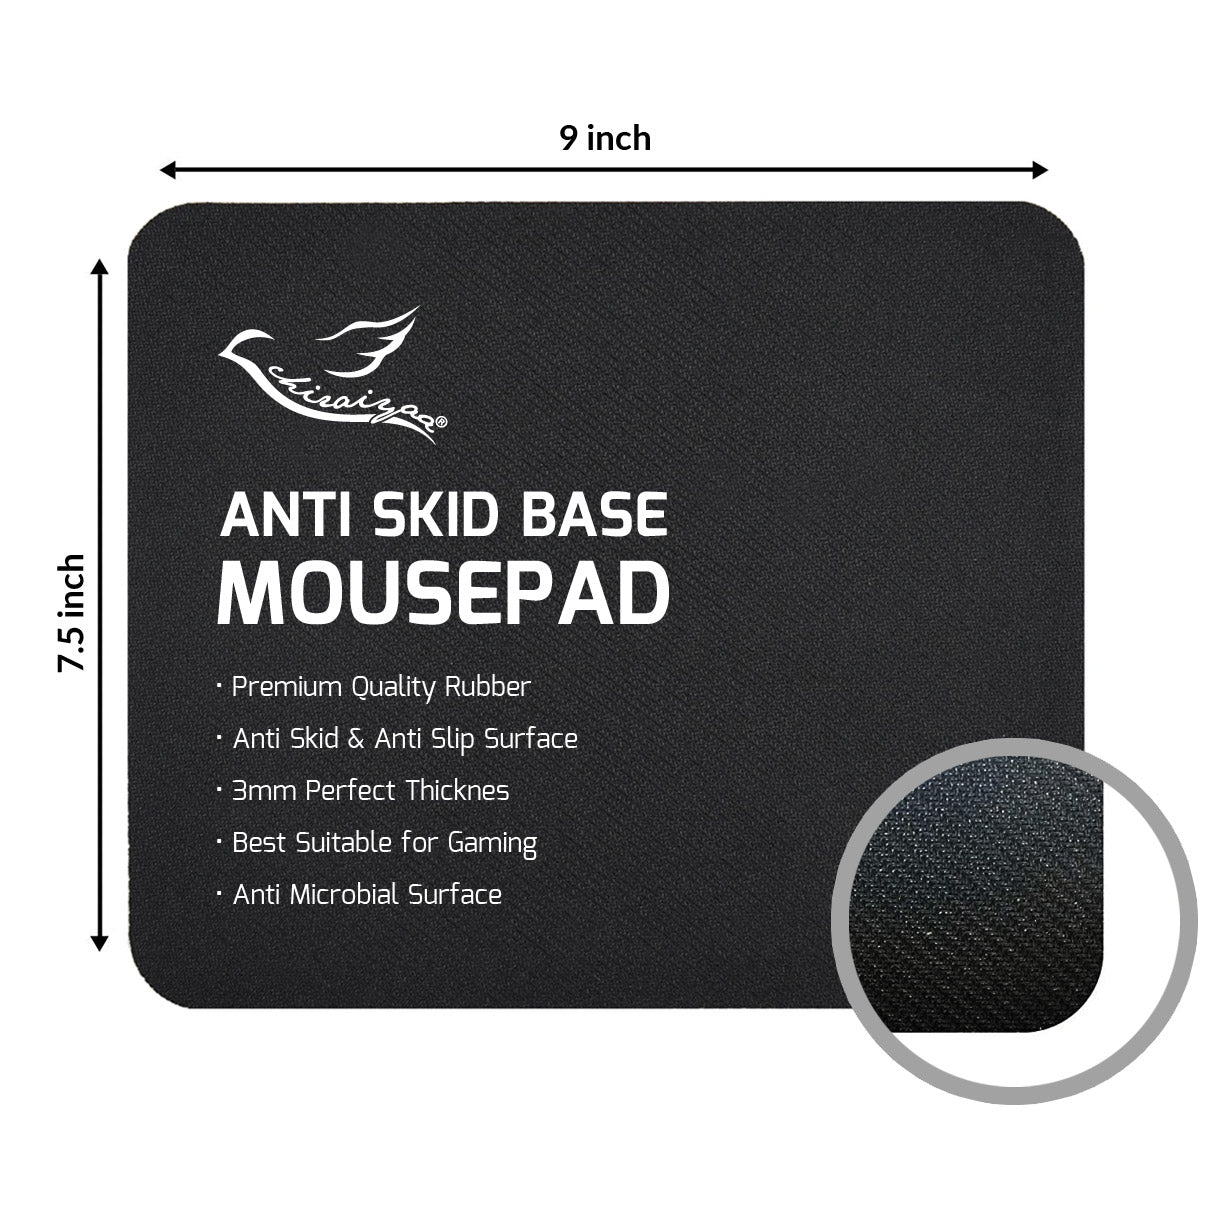 Snake Skin Background Designer Printed Premium Mouse pad (9 in x 7.5 in)